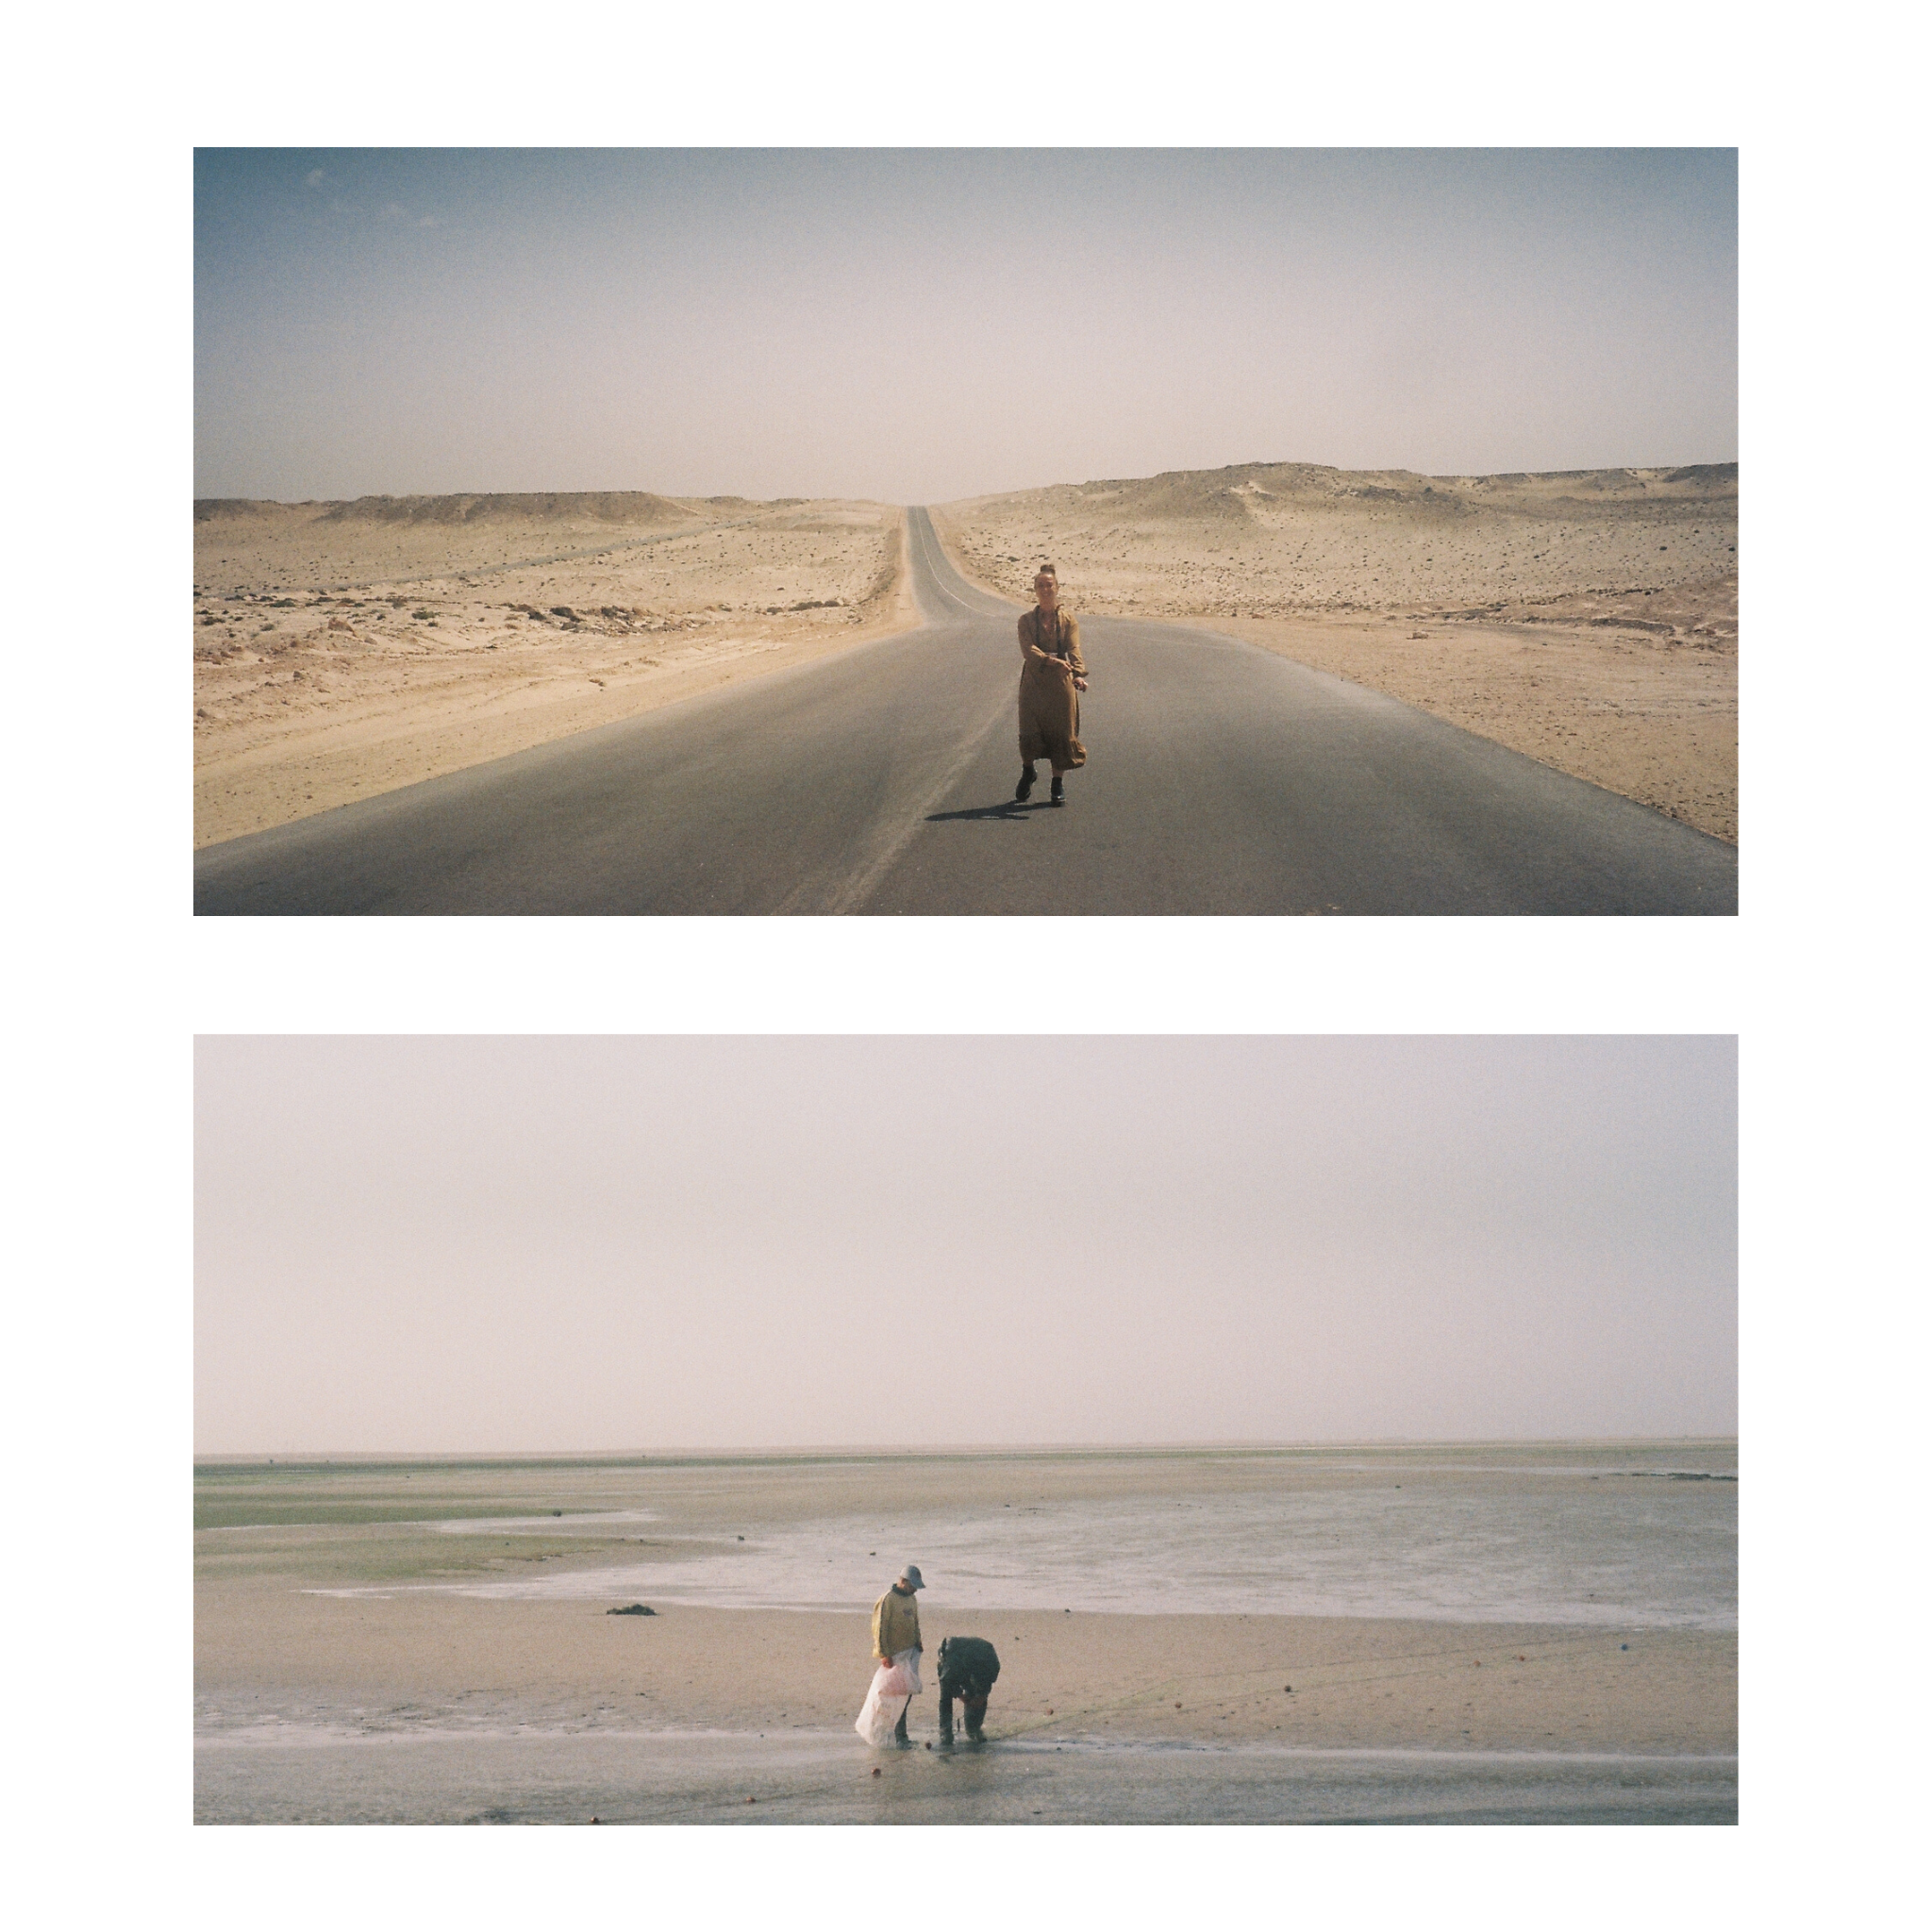 Morocco on film, Dakhla Western Sahara